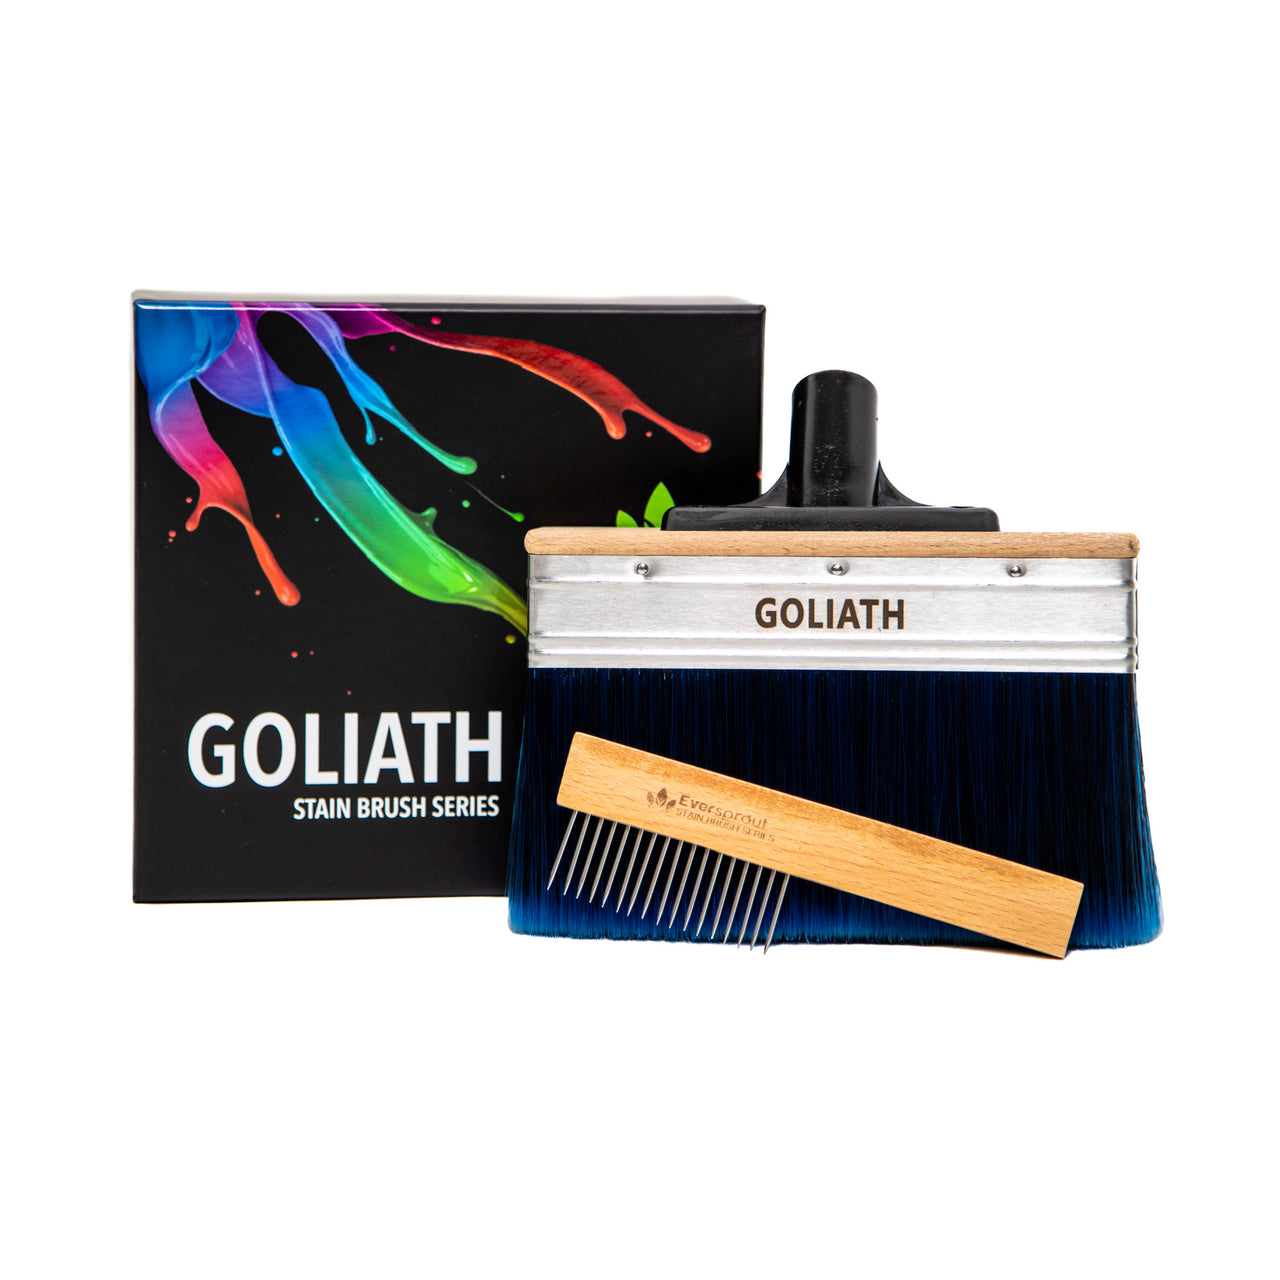 Goliath Stain Brush